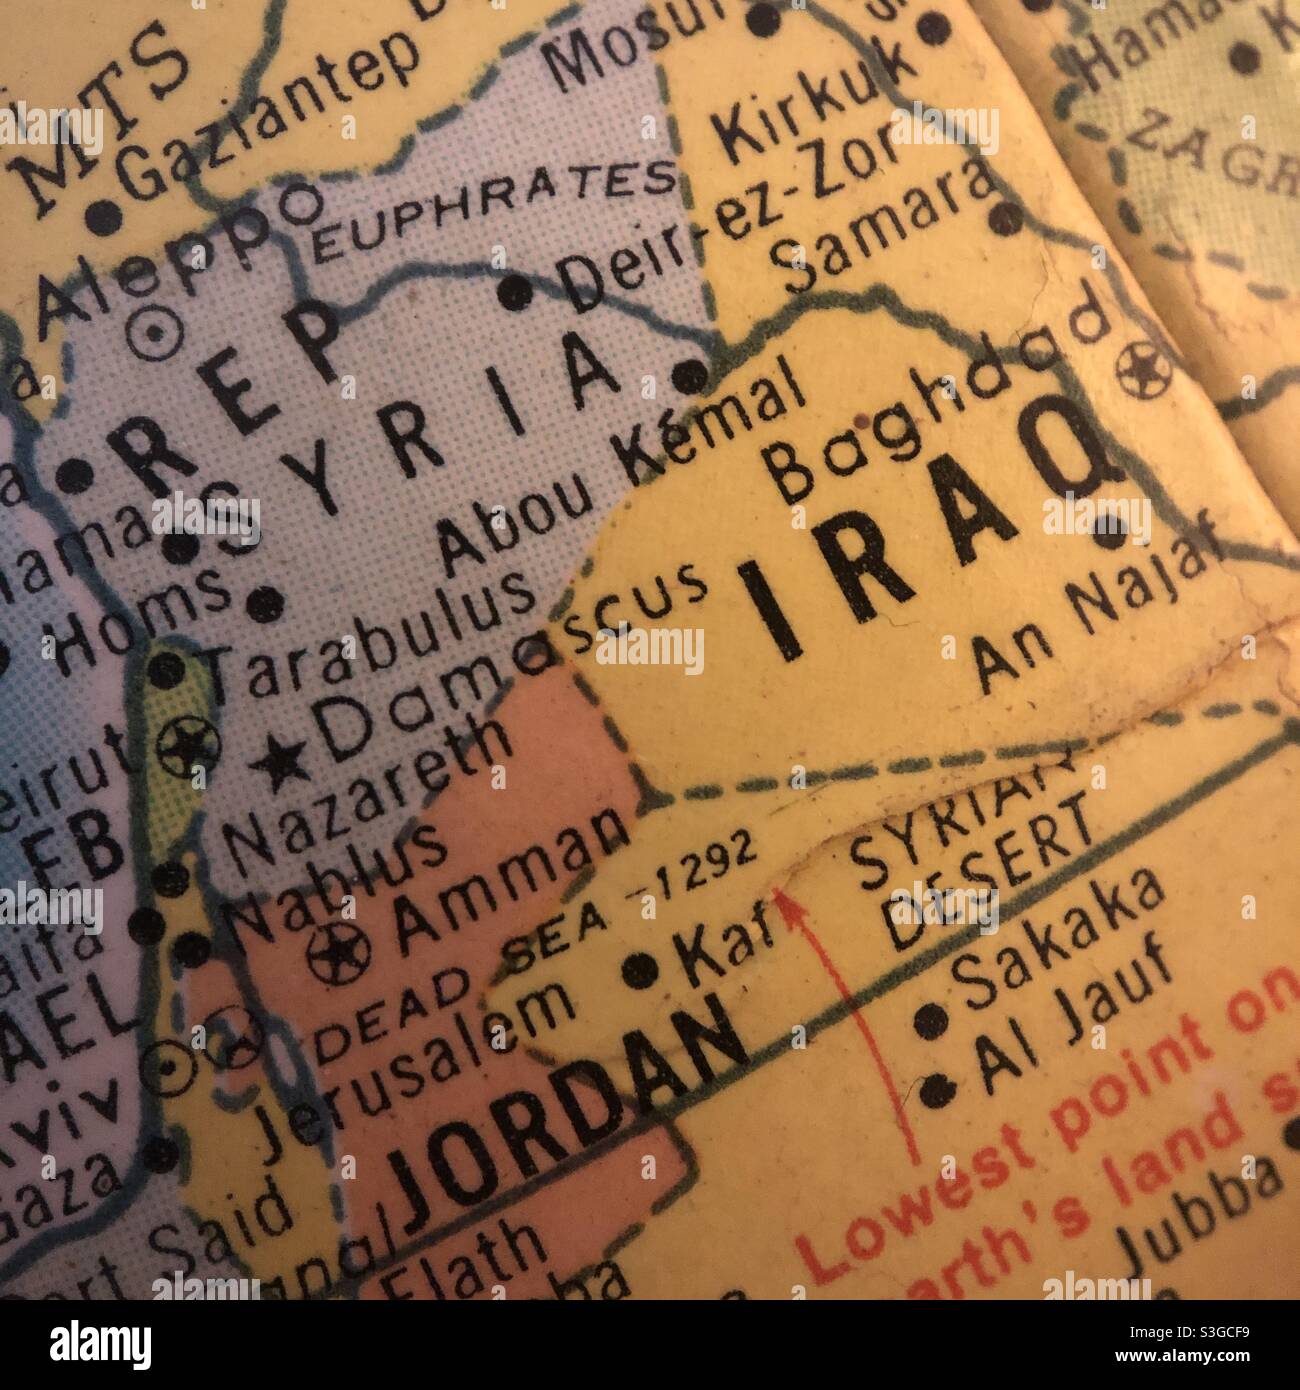 Iraq and Syria on vintage world globe Stock Photo